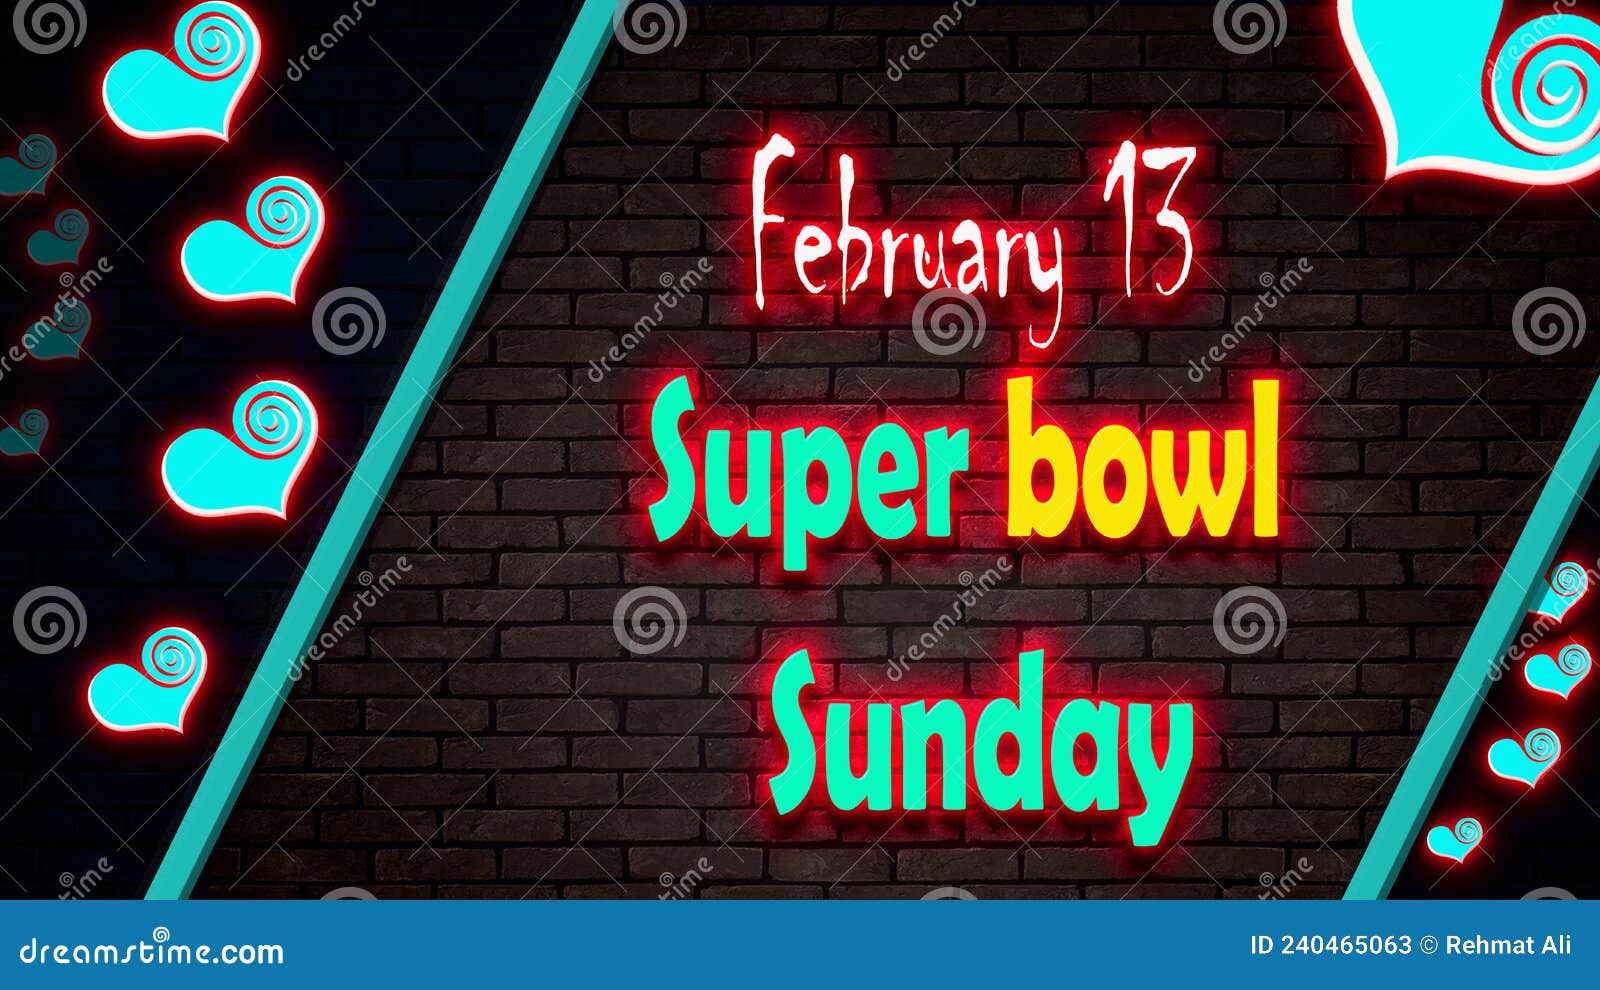 february 13 super bowl